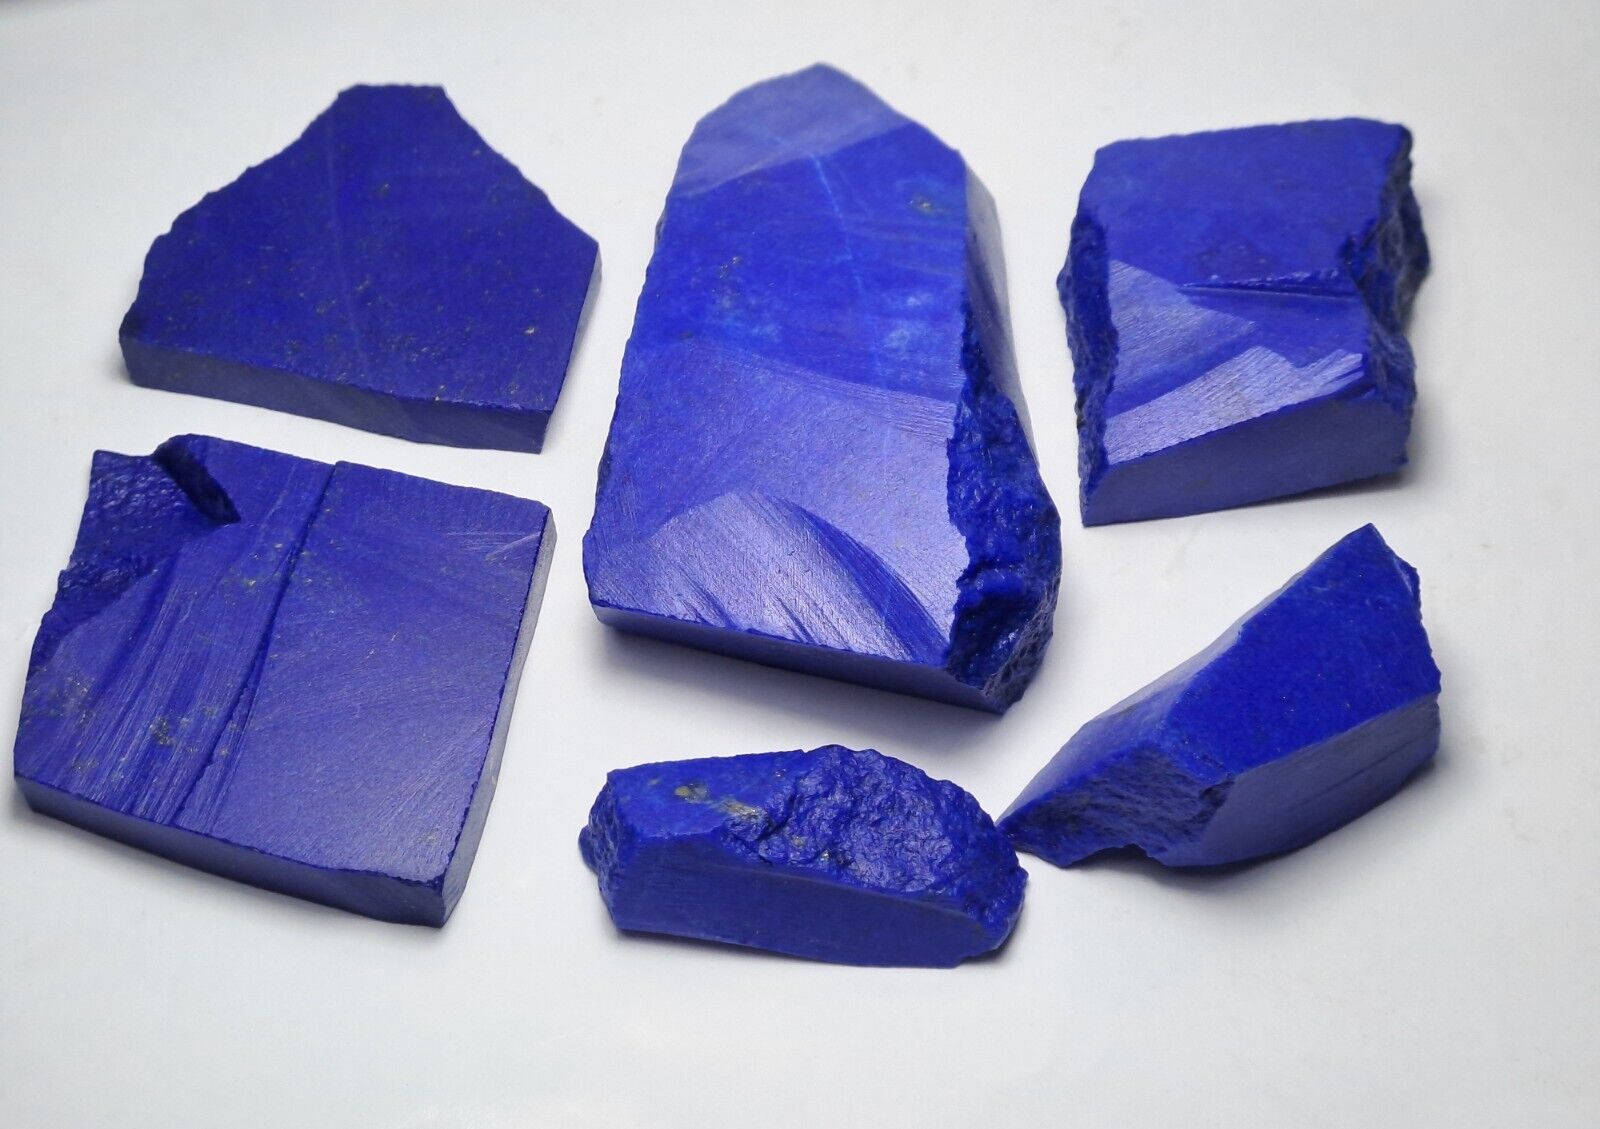 240 Gr. A+++ Quality Natural Lapis Lazuli Tiles, Lapis Lazuli Slices, Slabs @AFG